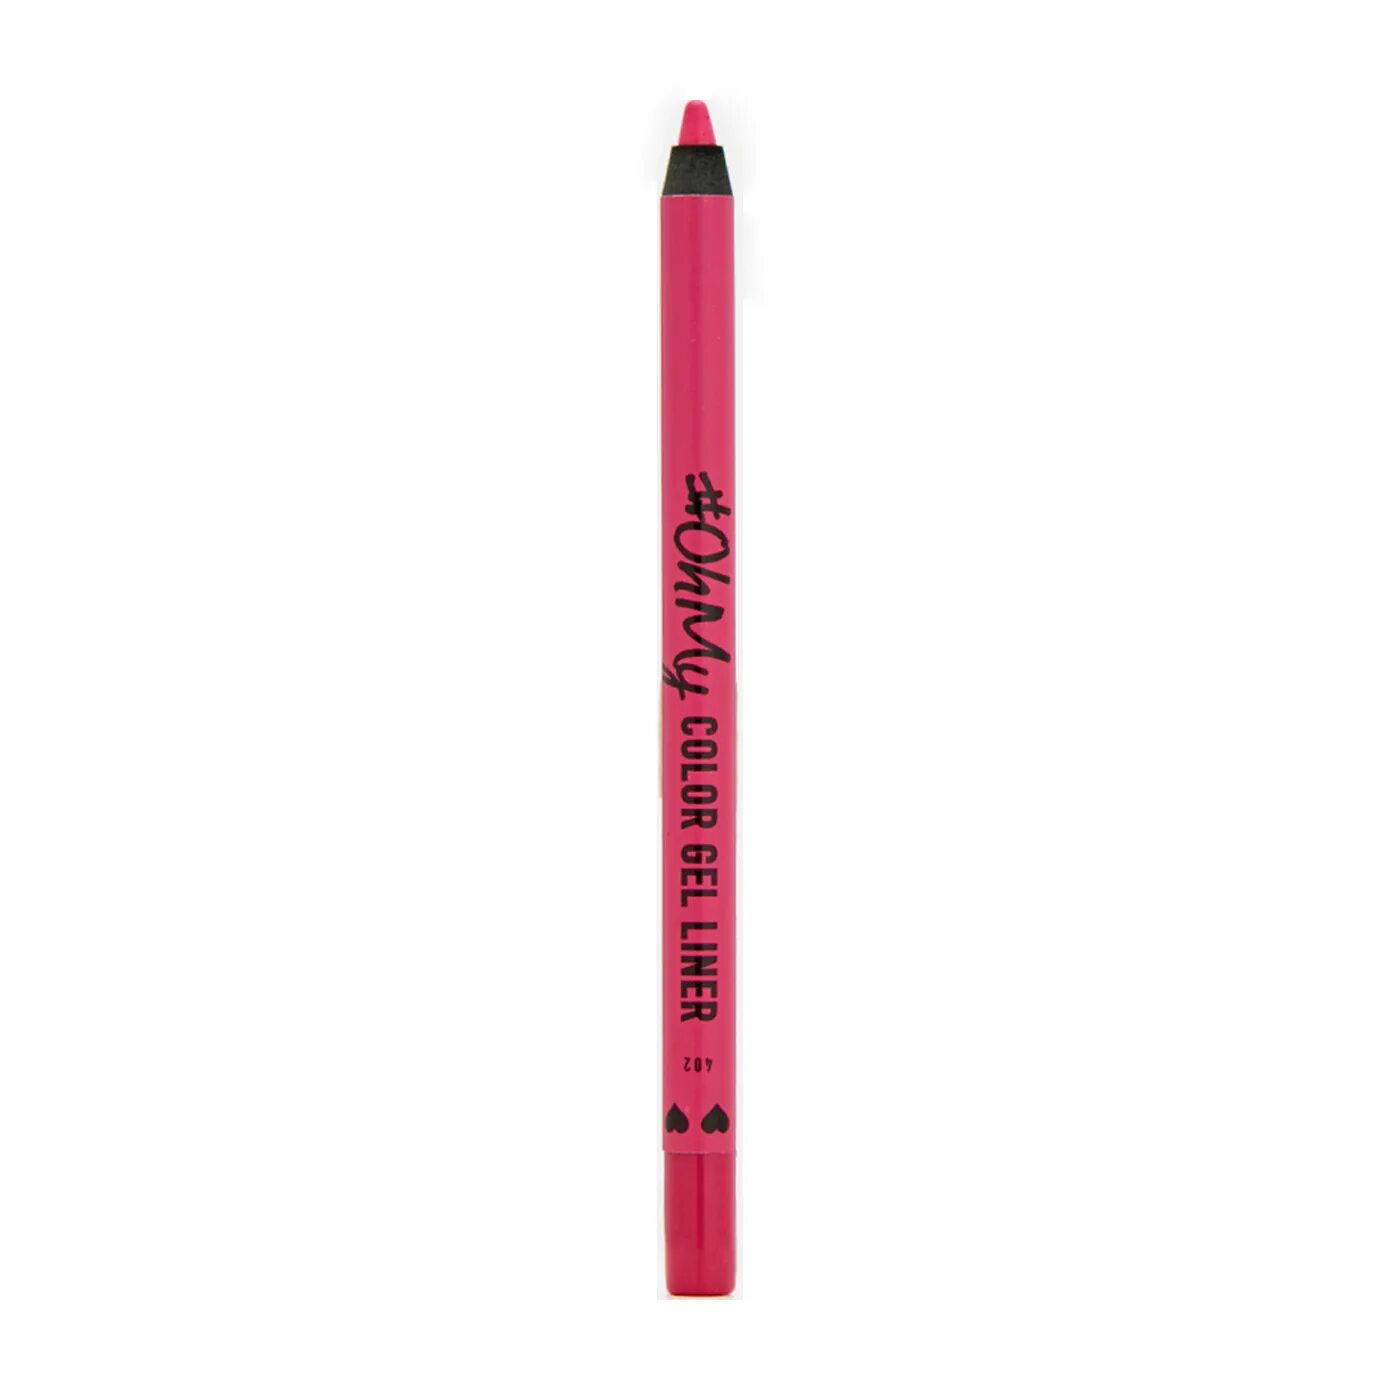 Стойкий гелевый карандаш. Lamel 402 карандаш. Lamel Color Gel Liner. Карандаш Oh my Color Lamel. Гелевый карандаш Lamel.